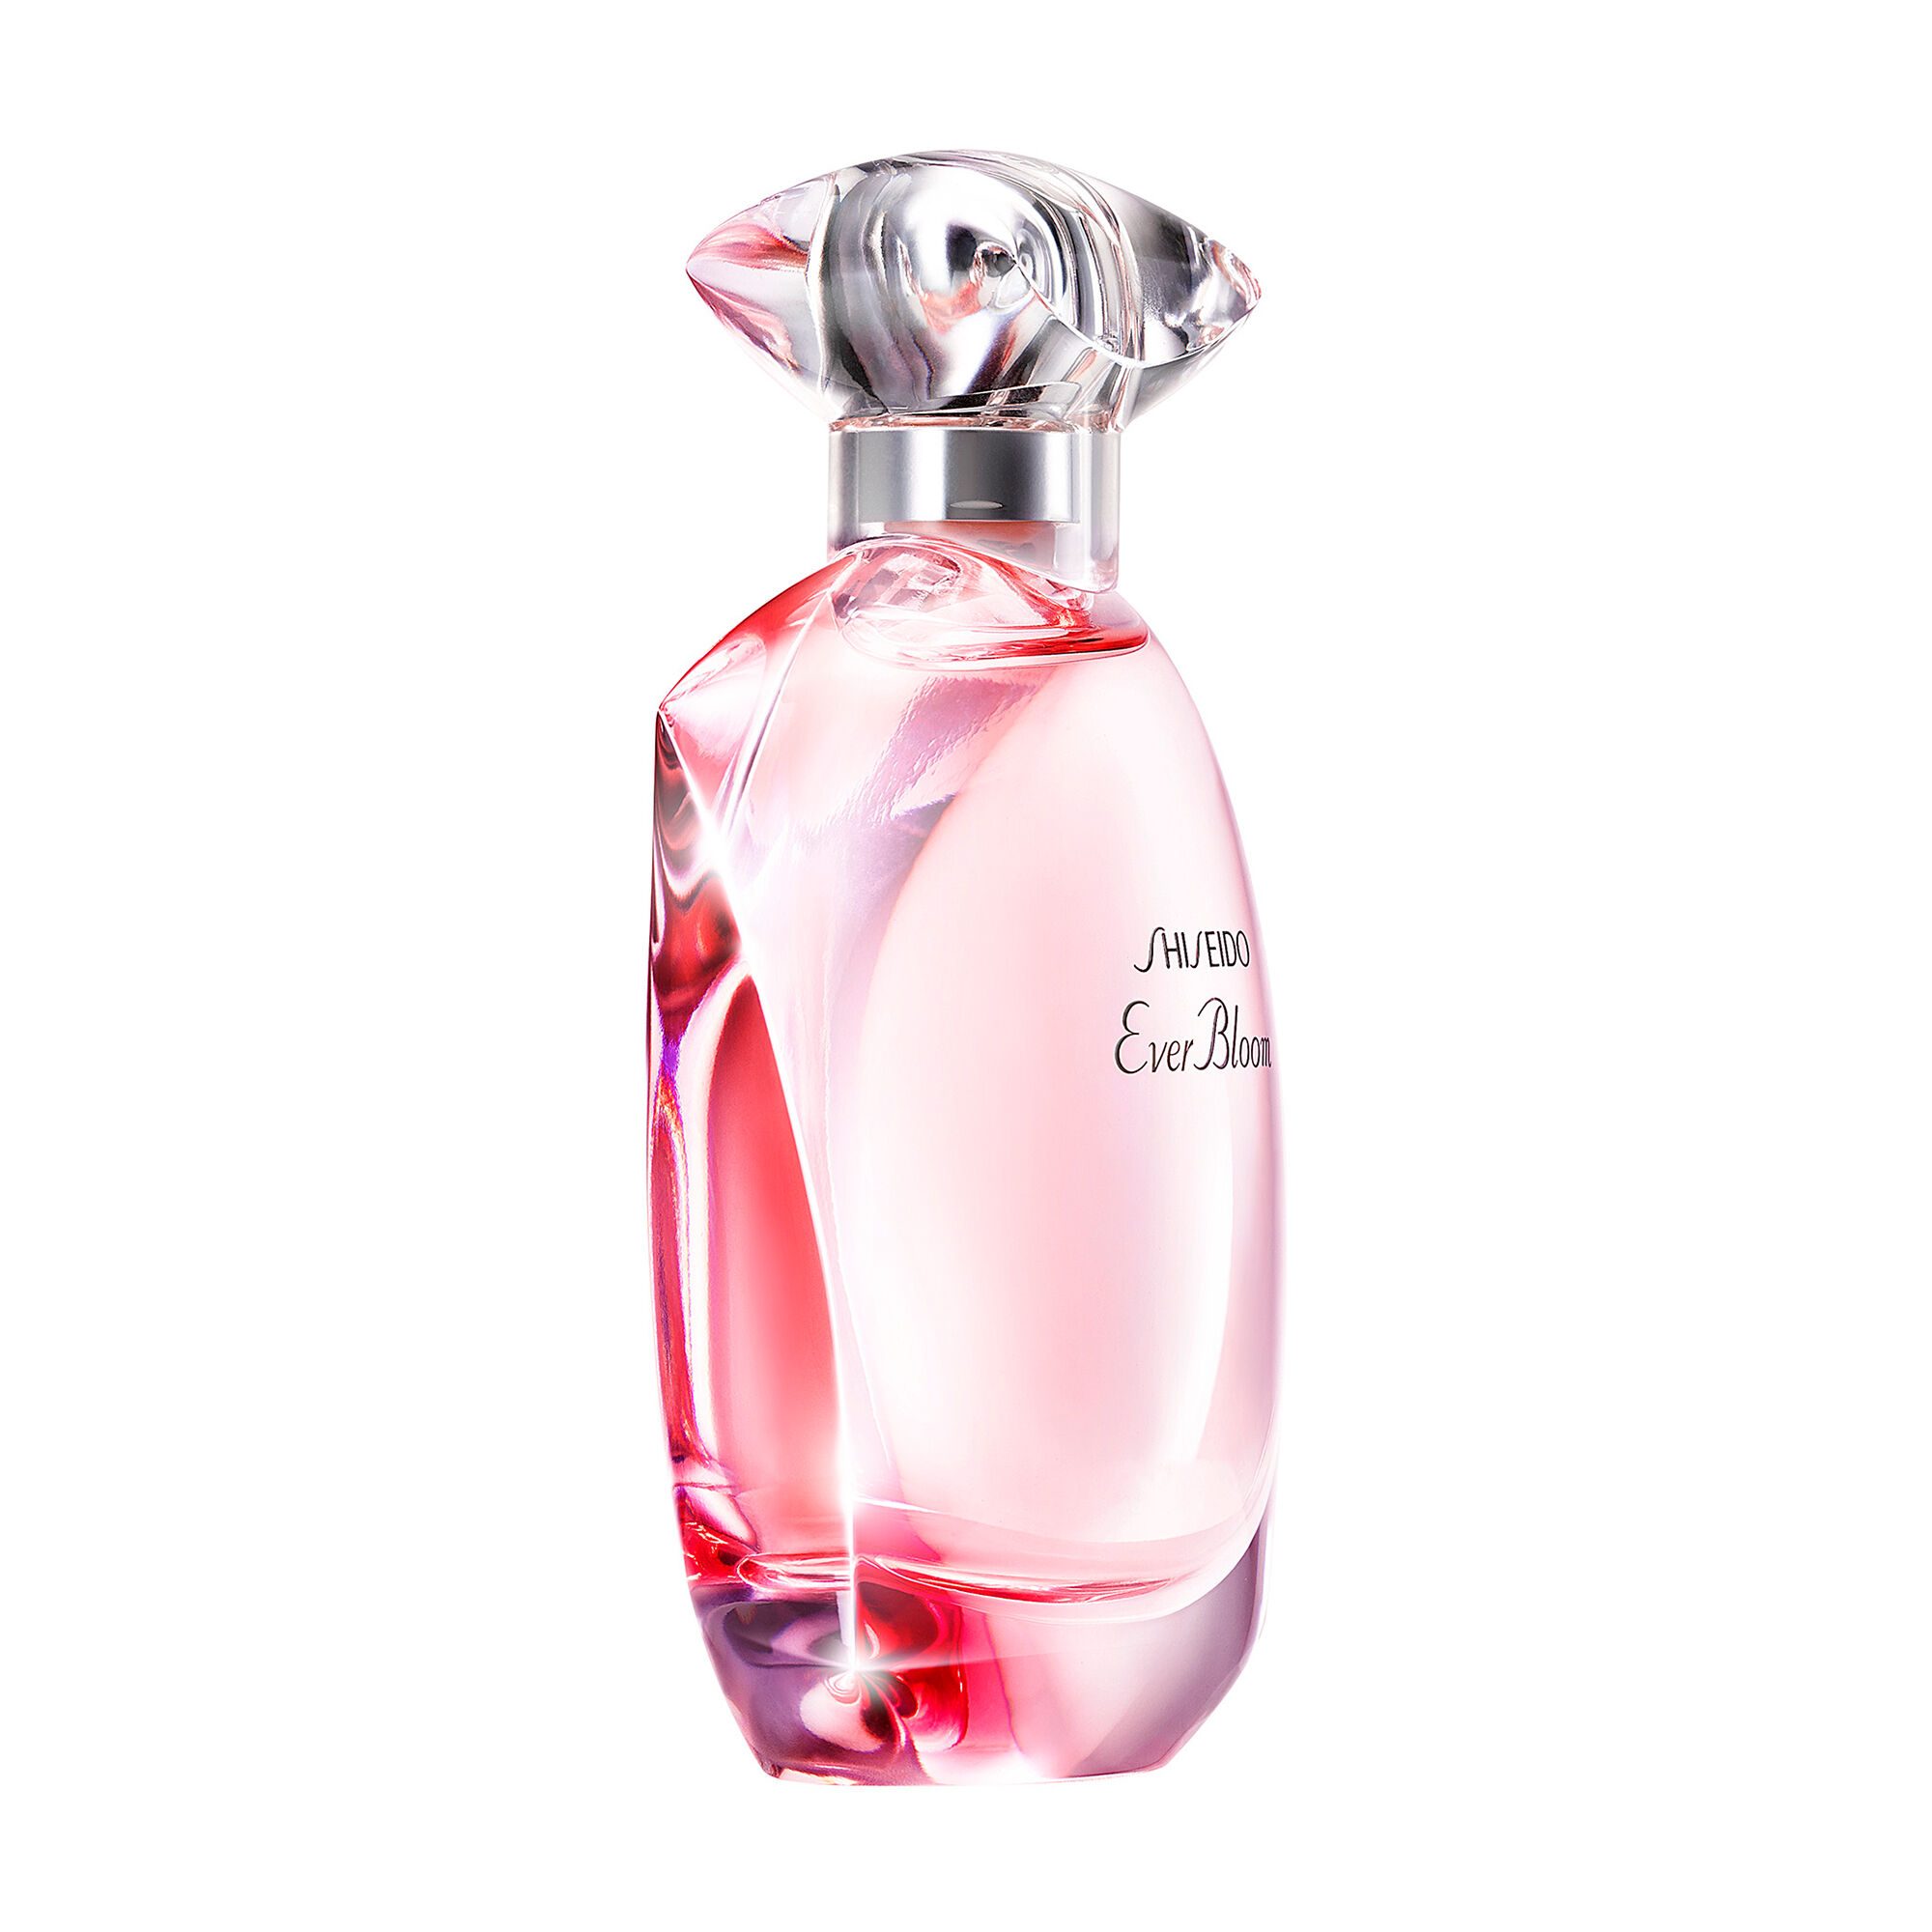 shiseido ever bloom eau de parfum 90 ml